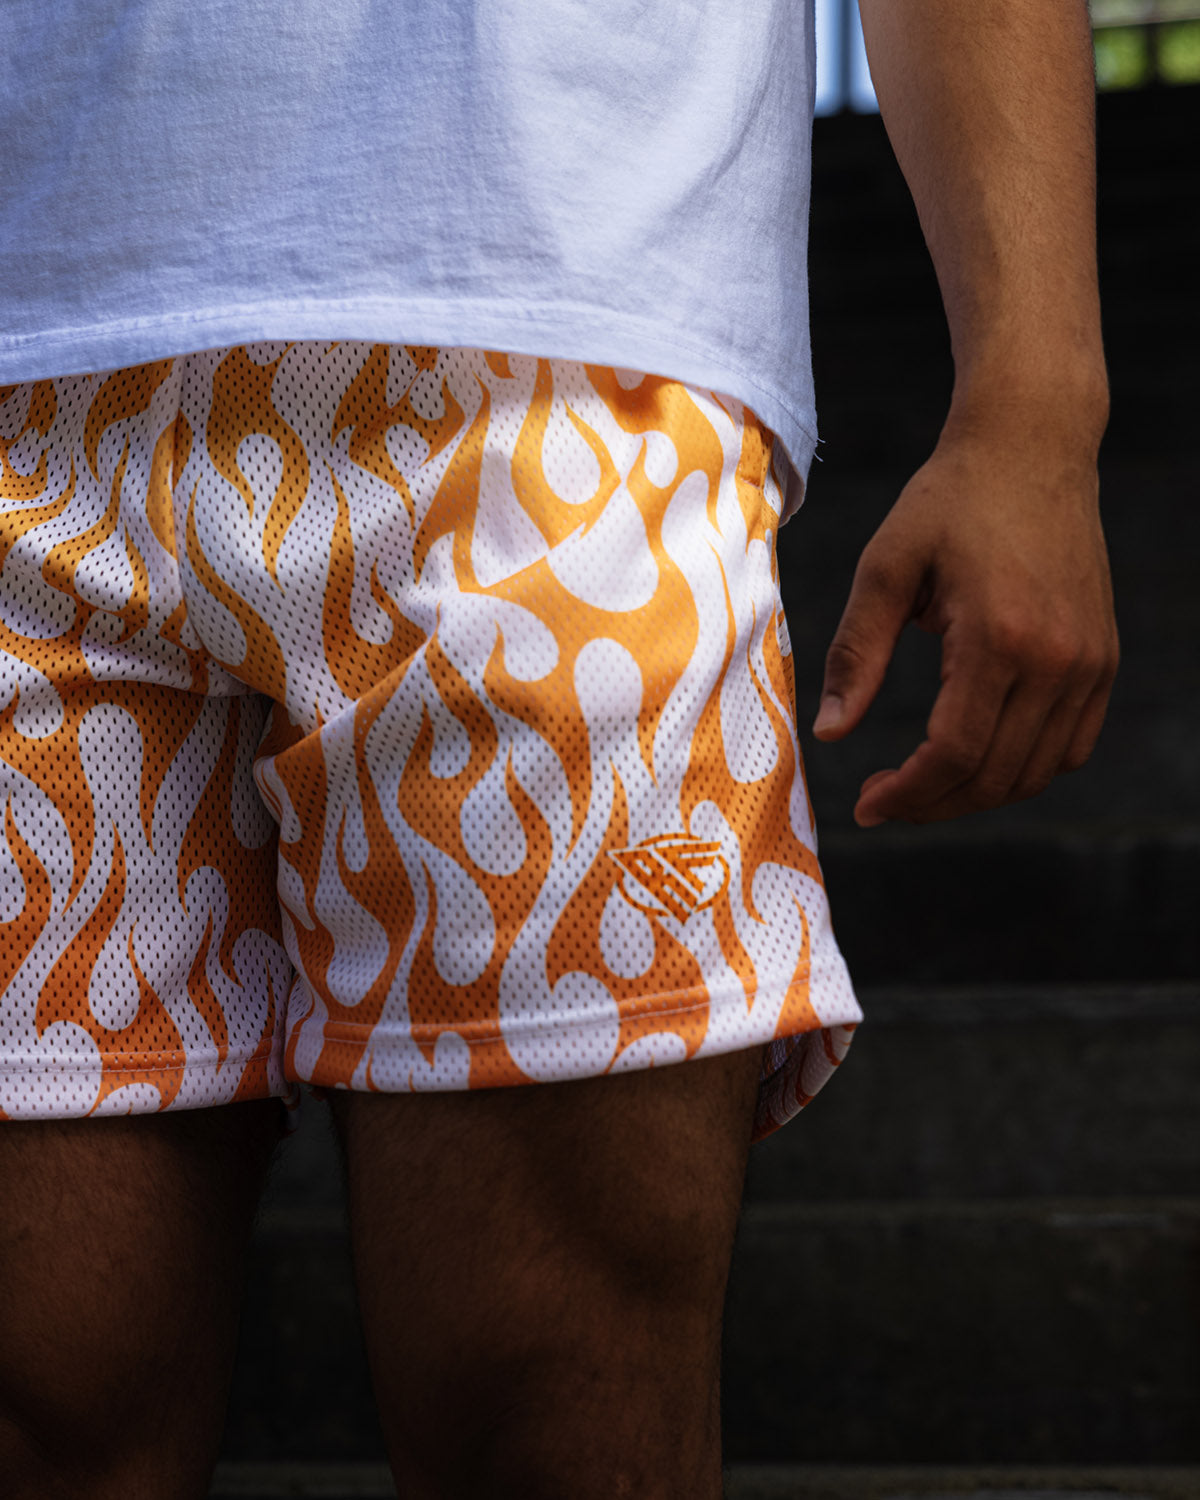 Louis Vuitton Nylon Swim Shorts Orange Flame. Size M0